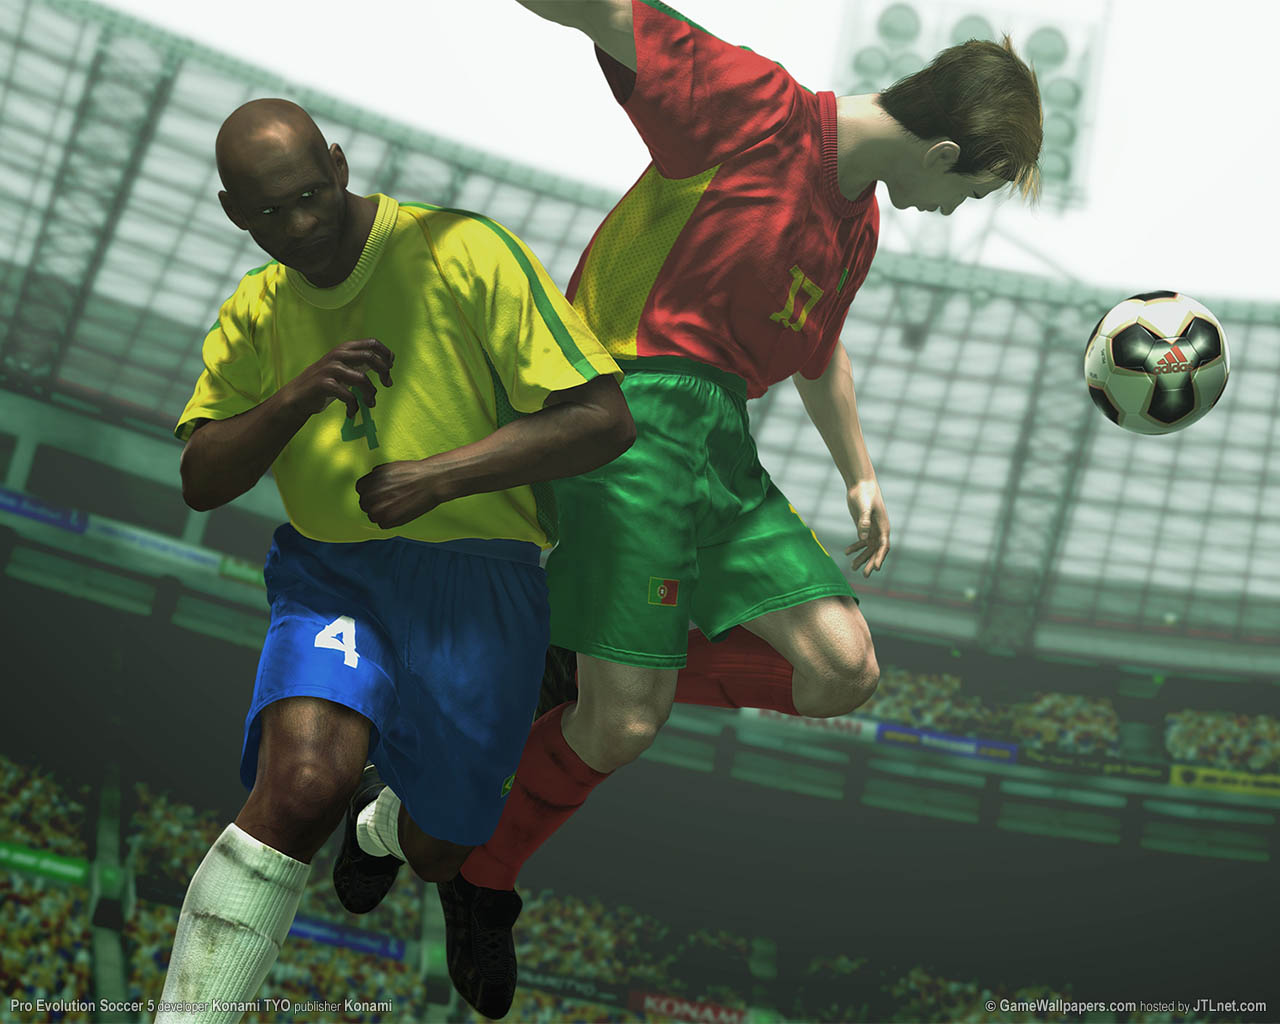 Pro Evolution Soccer 5 achtergrond 01 1280x1024